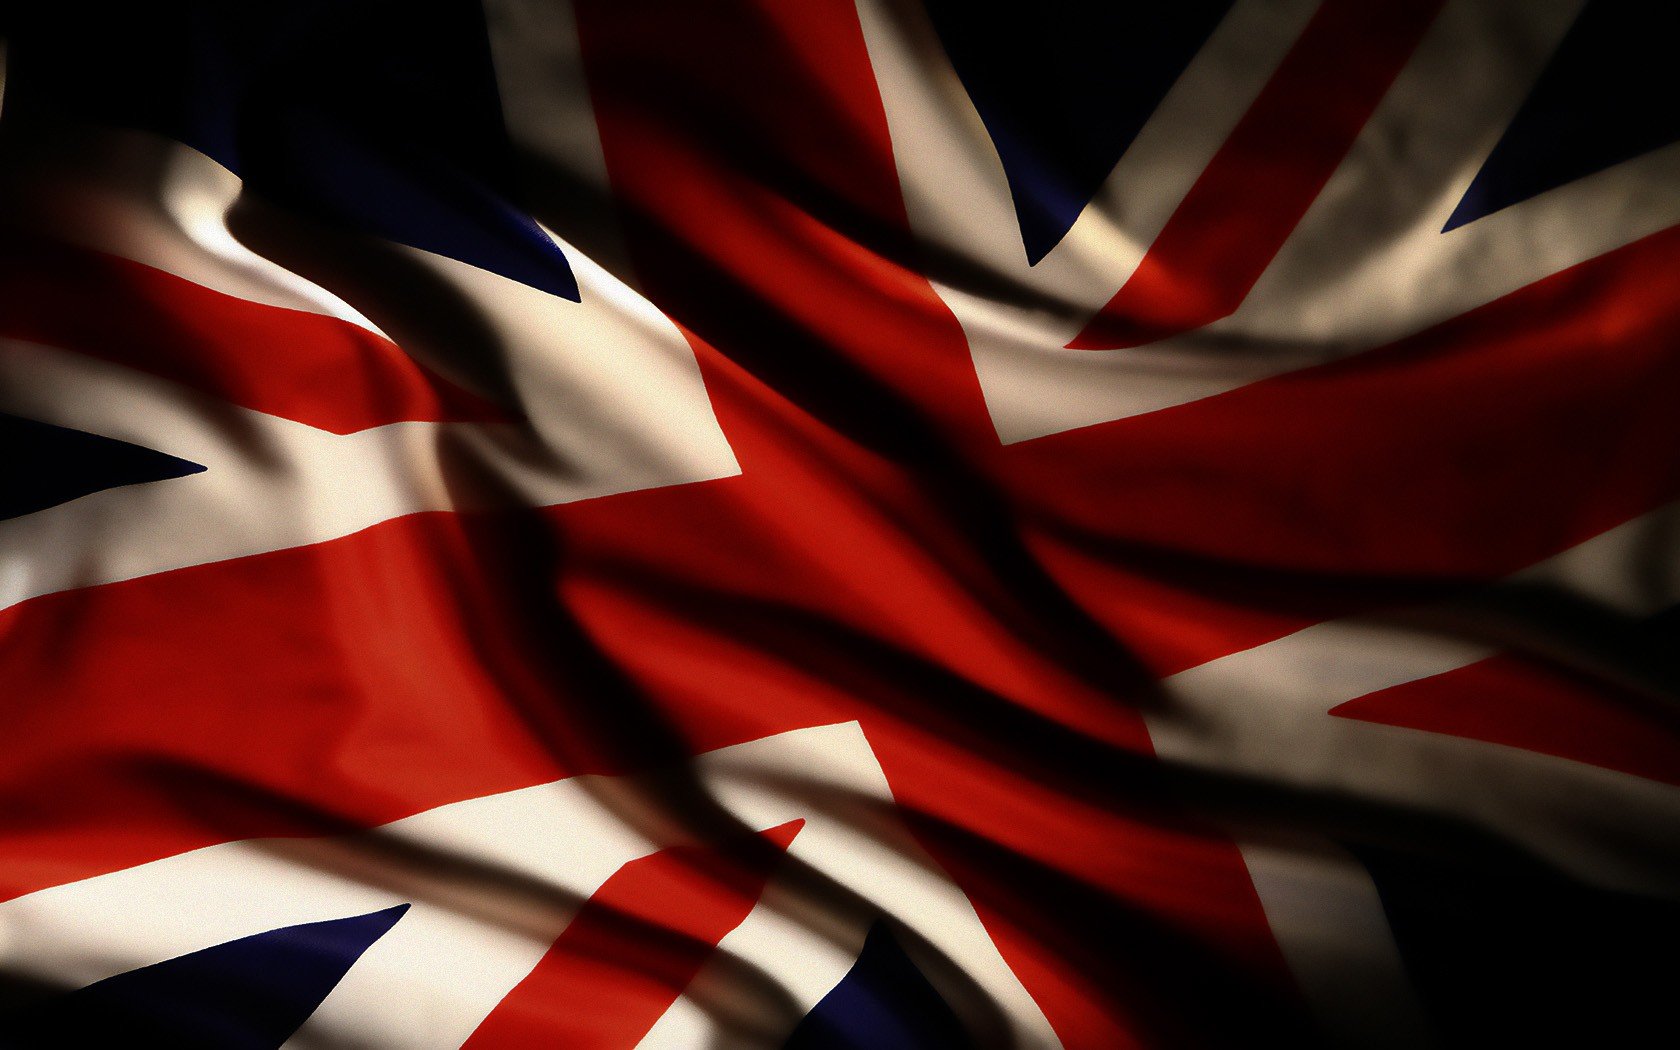 Flags United Kingdom Union Jack wallpaper 1680x1050 323433 1680x1050